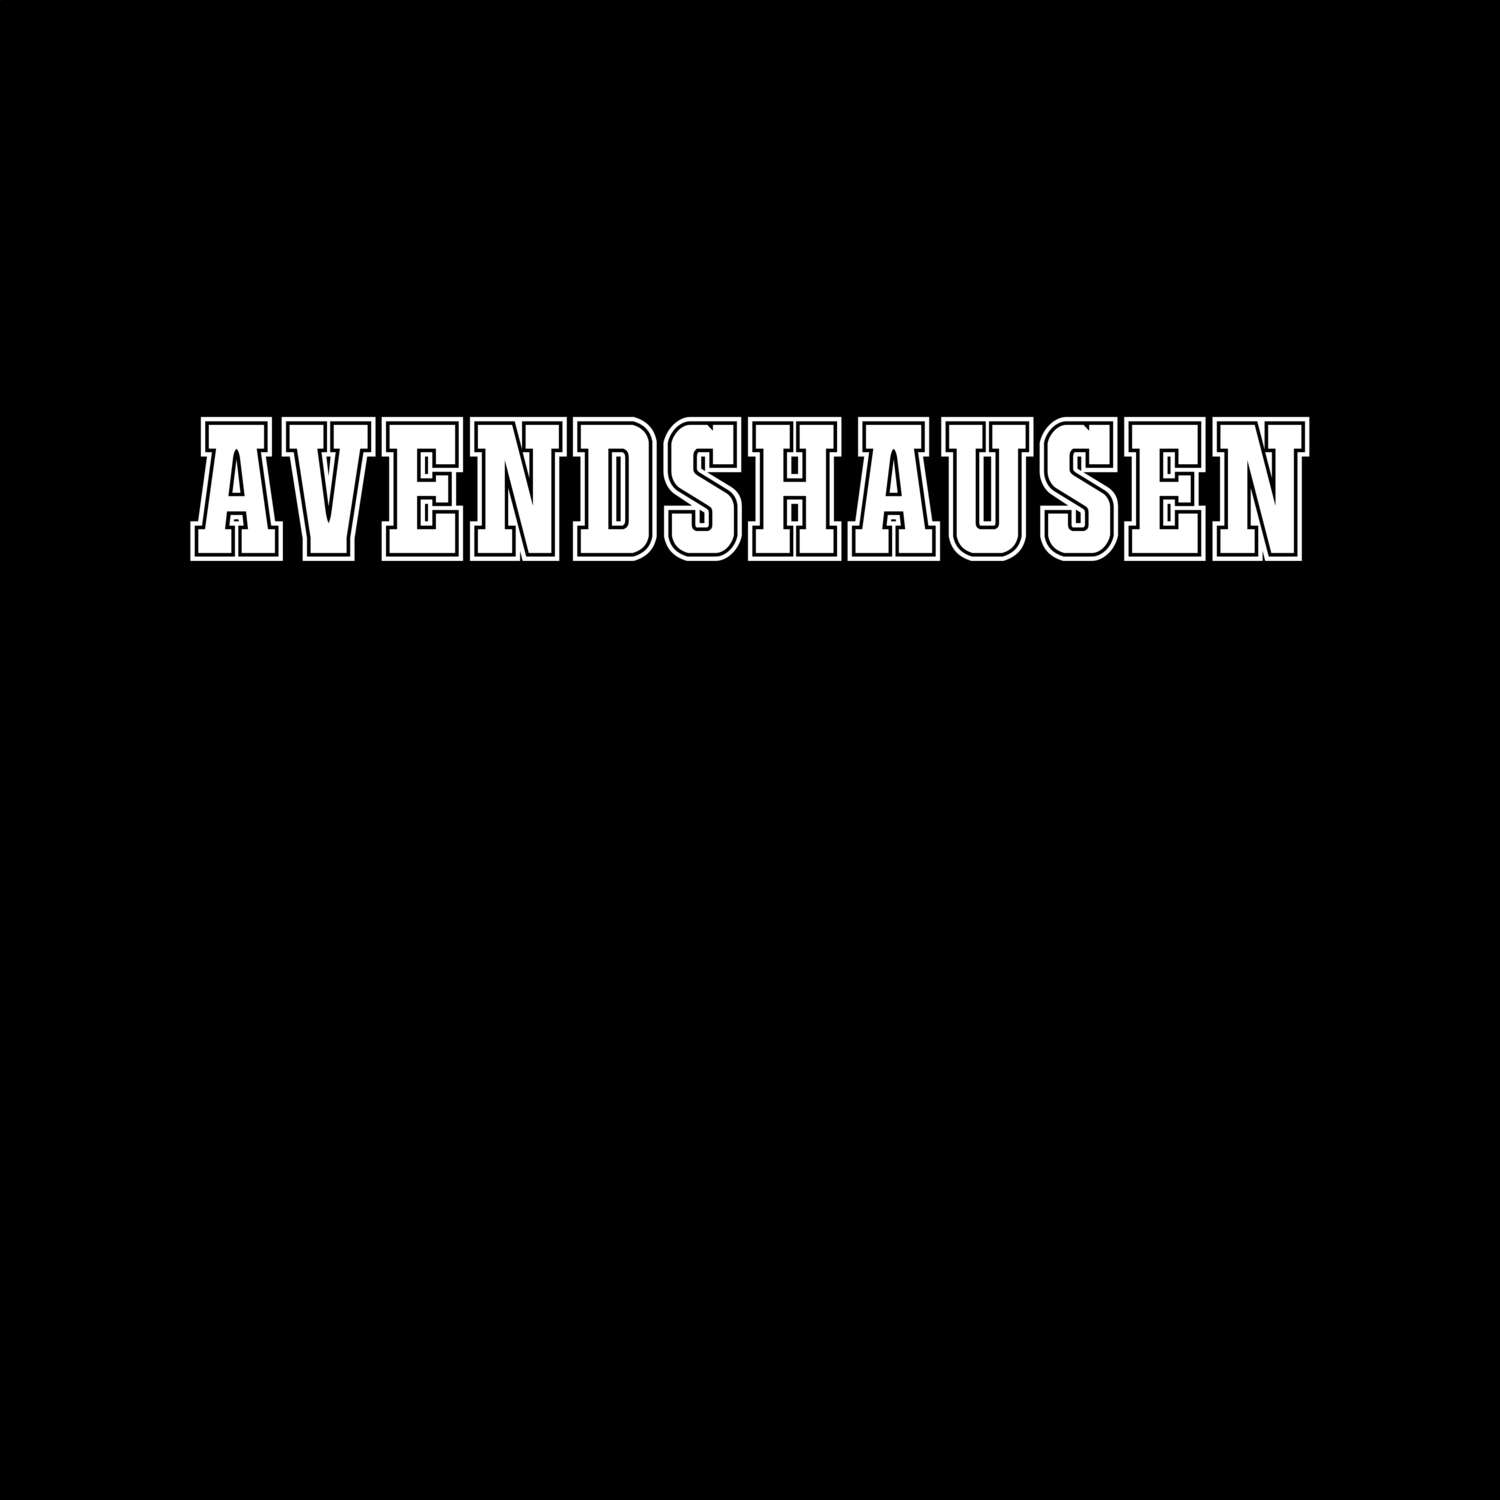 Avendshausen T-Shirt »Classic«